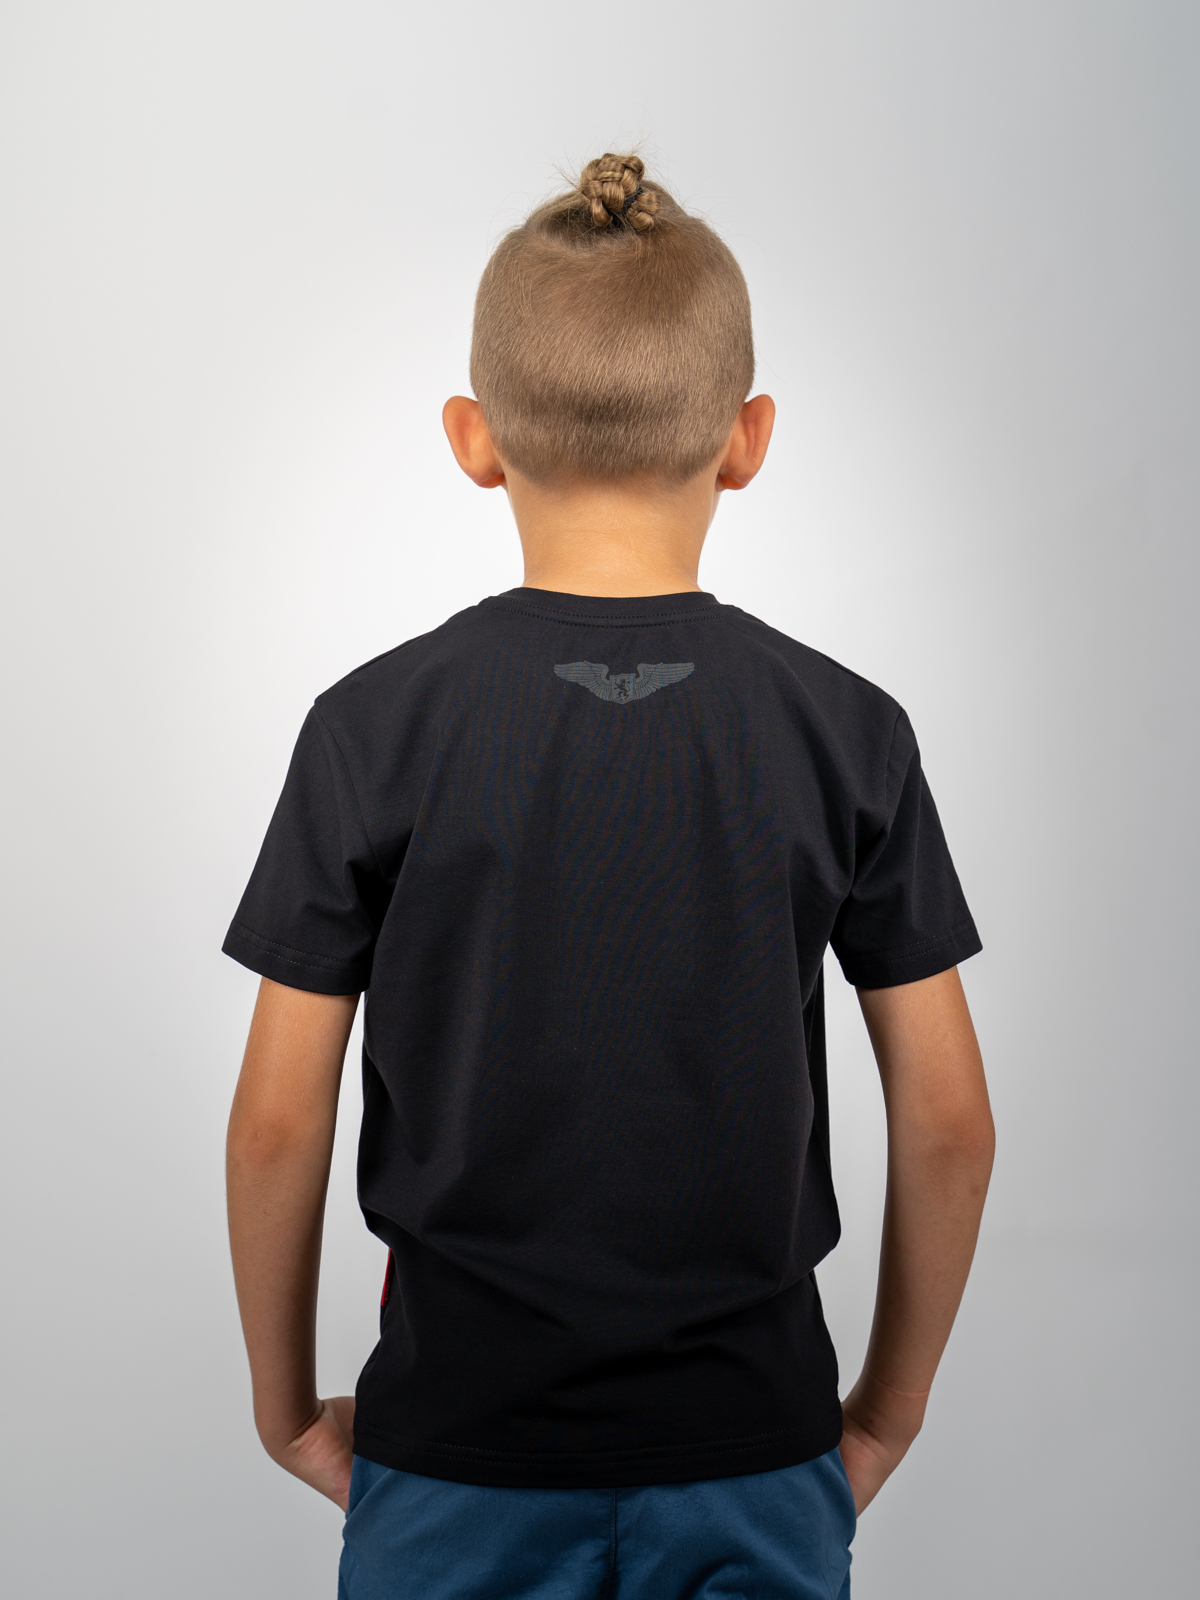 Kids T-Shirt Lion (Roundel). Color black. 1.